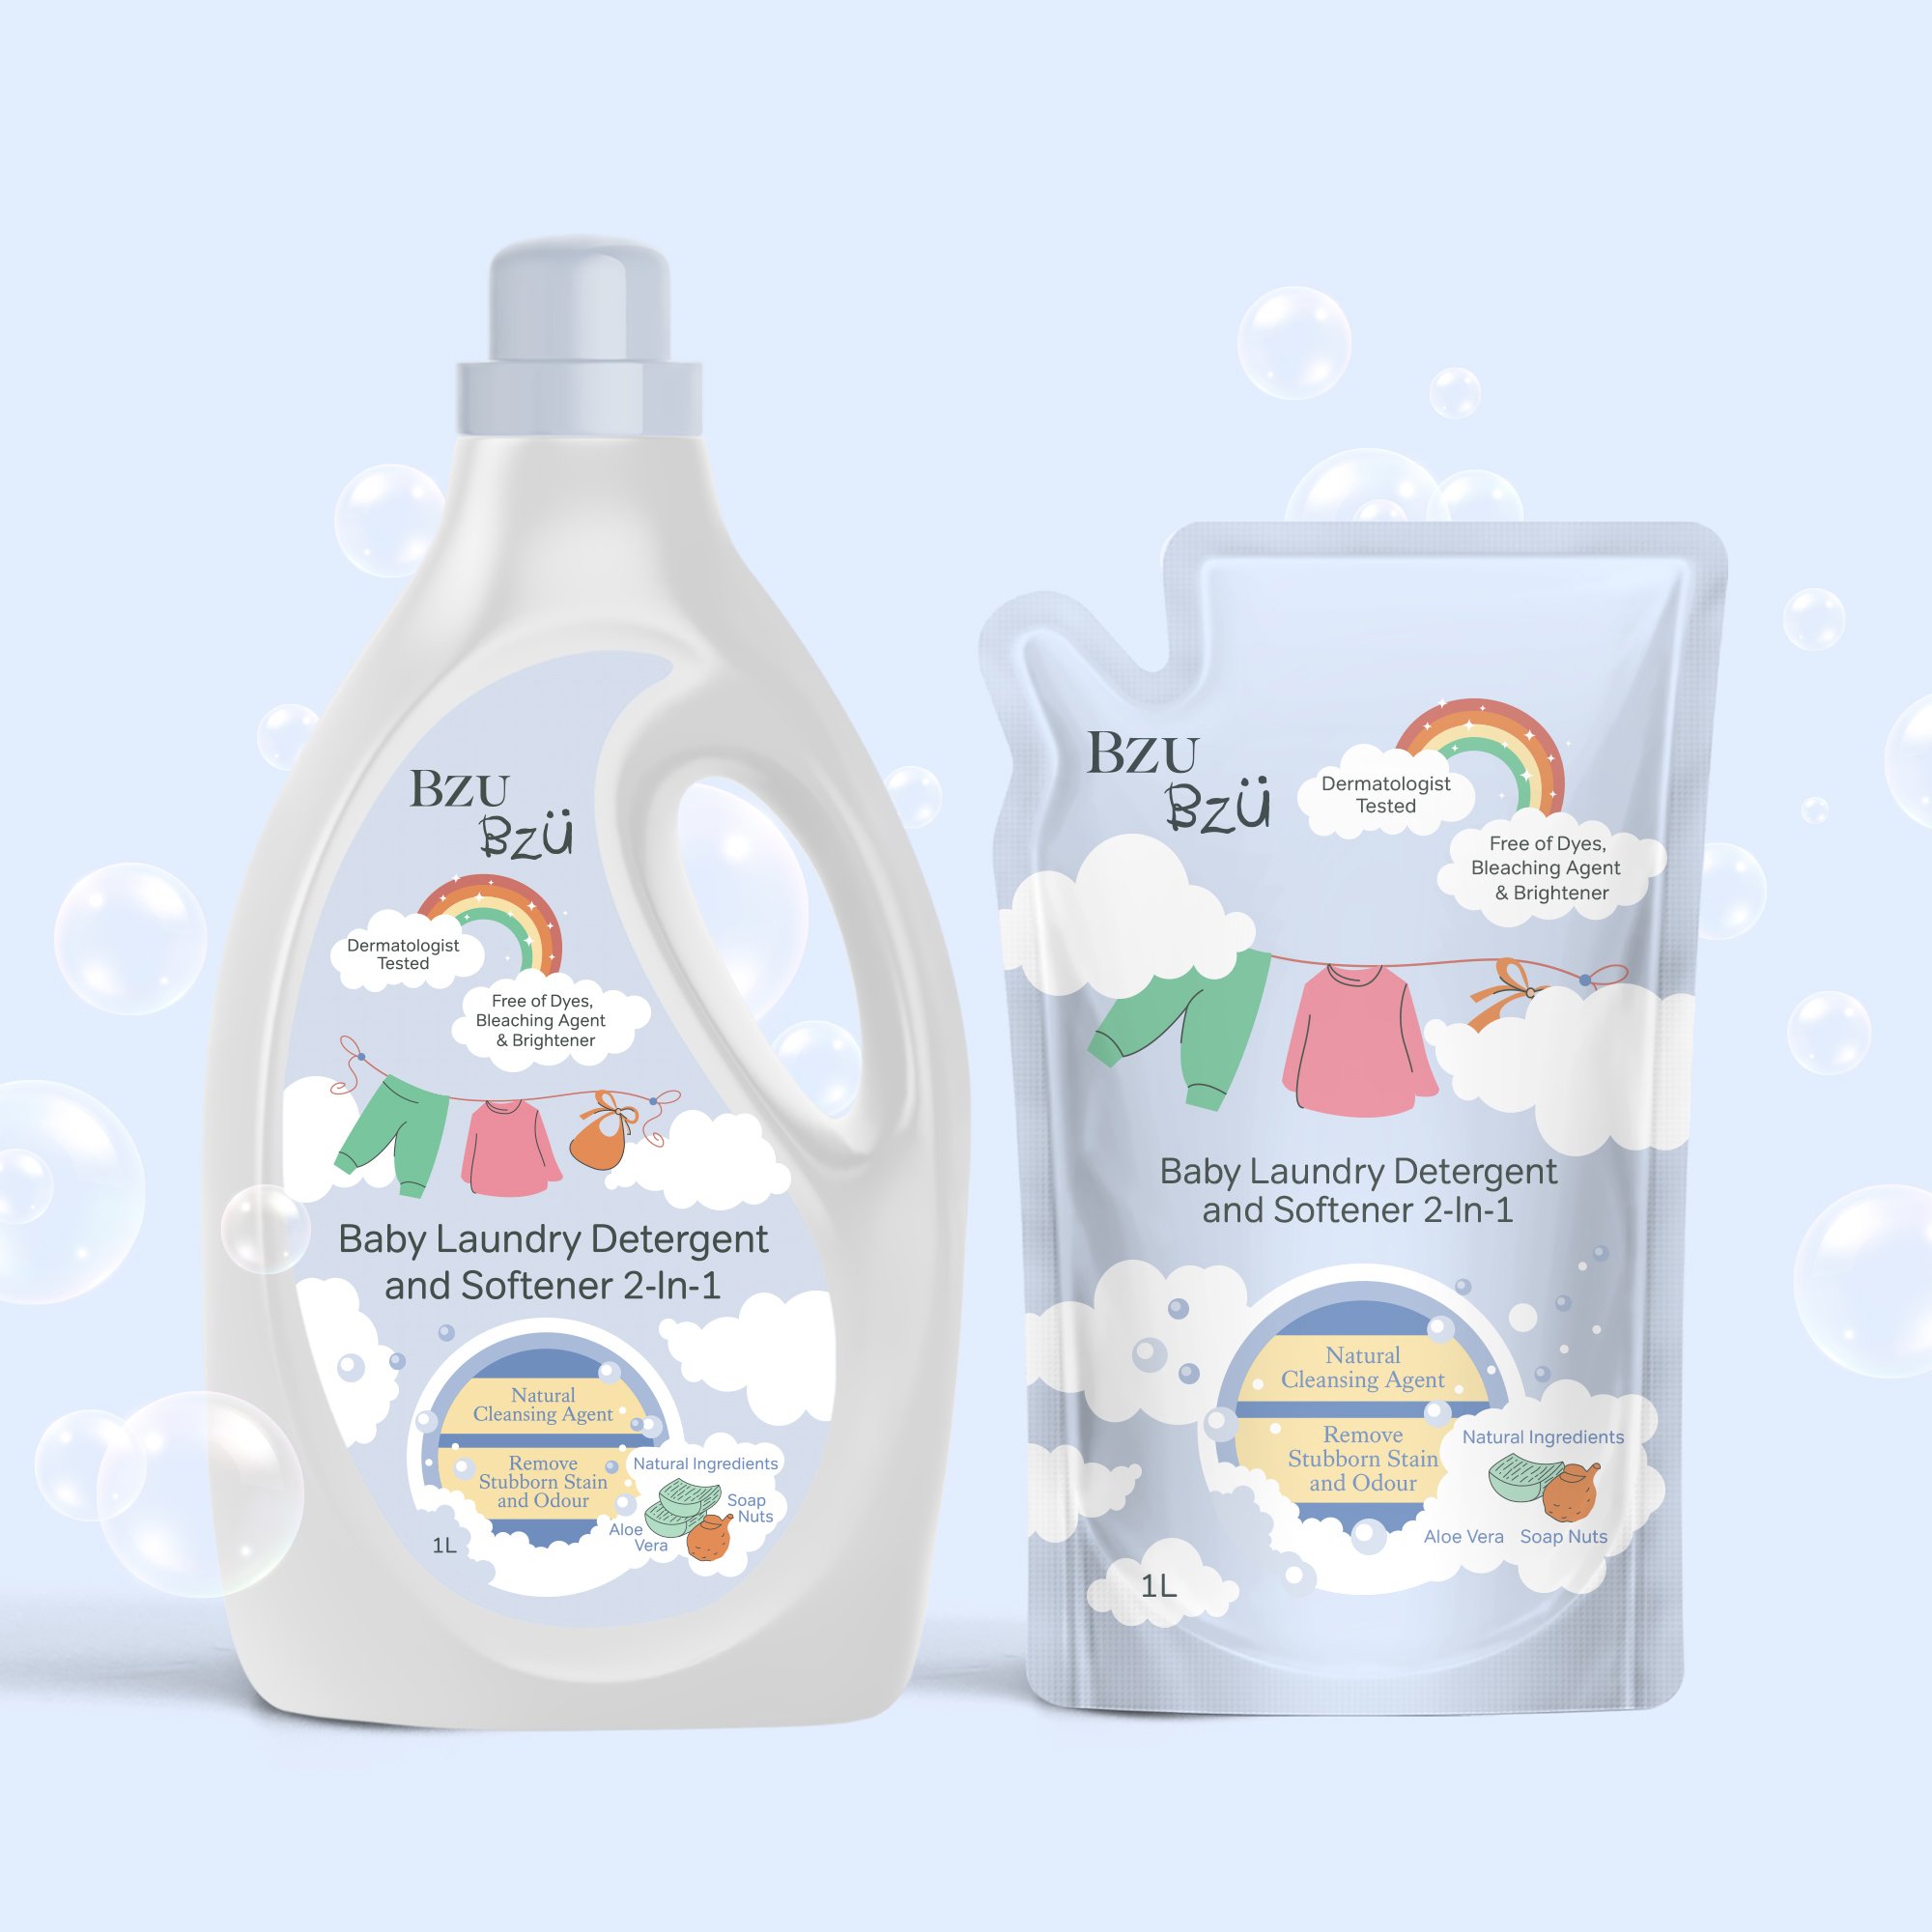 BzuBzu Baby Laundry Detergent Bottle Label and Pouch Design by YANA Singapore Freelance Designer.jpg